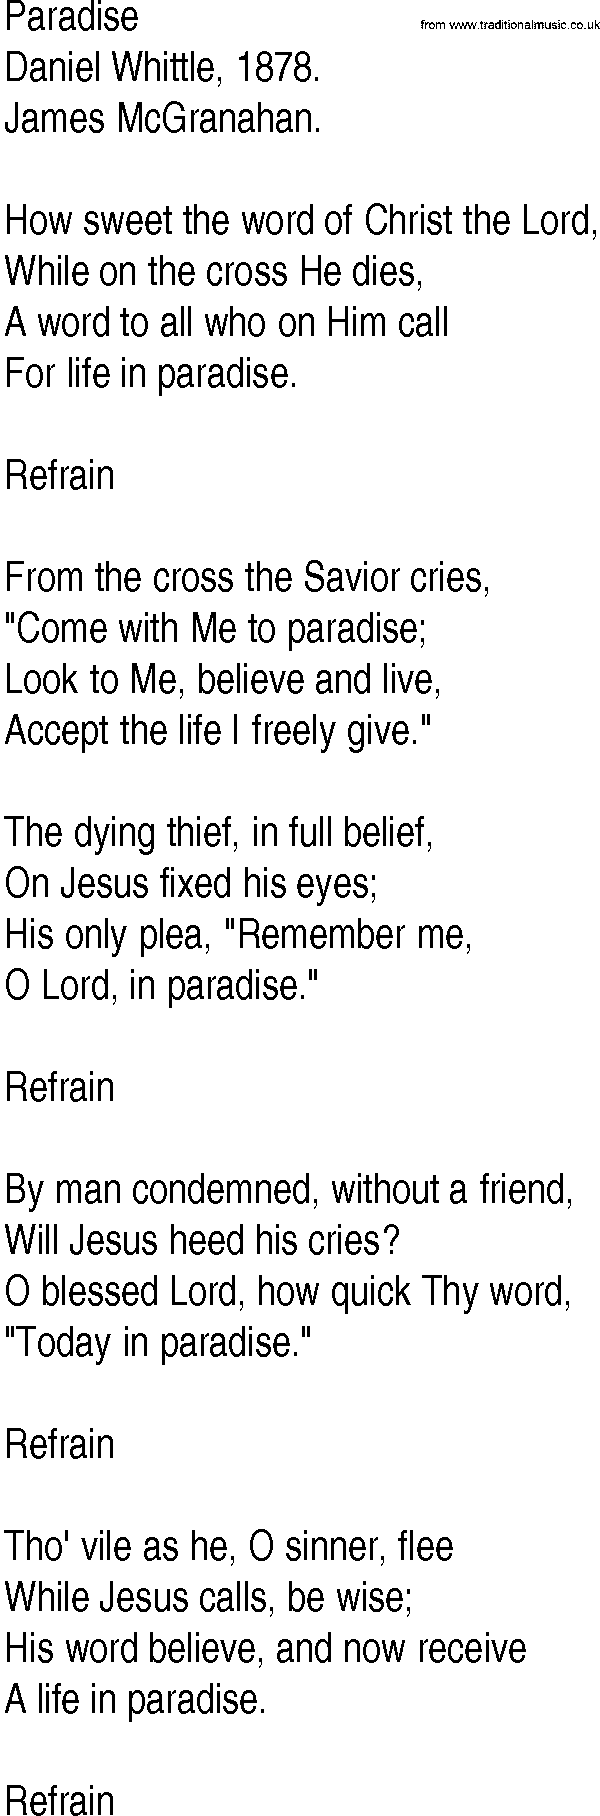 Hymn and Gospel Song: Paradise by Daniel Whittle lyrics